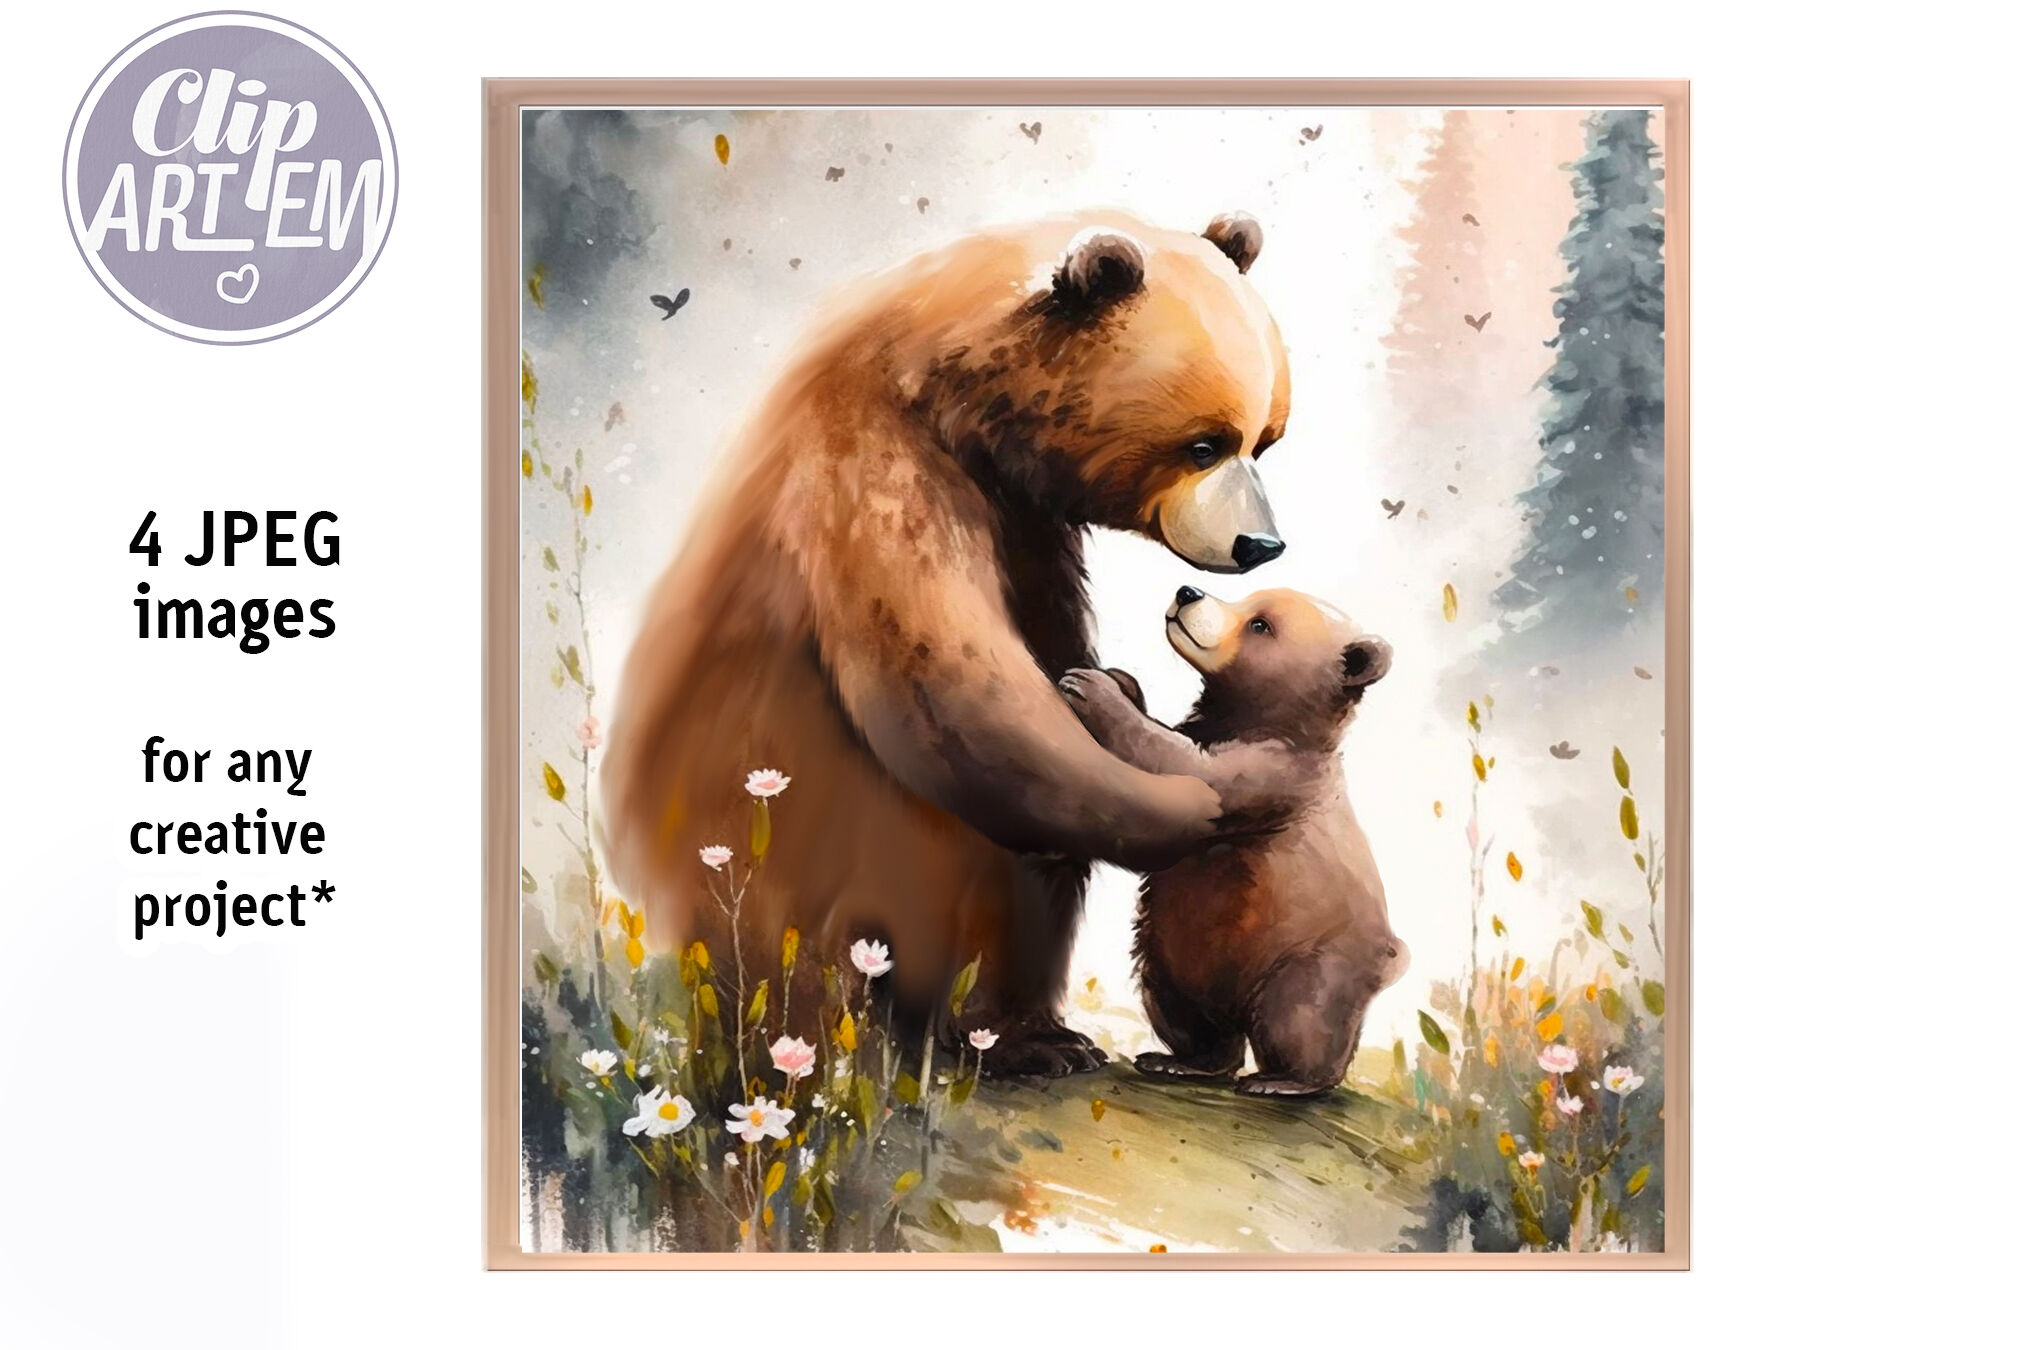 Mama Bear and Cubs Wallpaper Mural